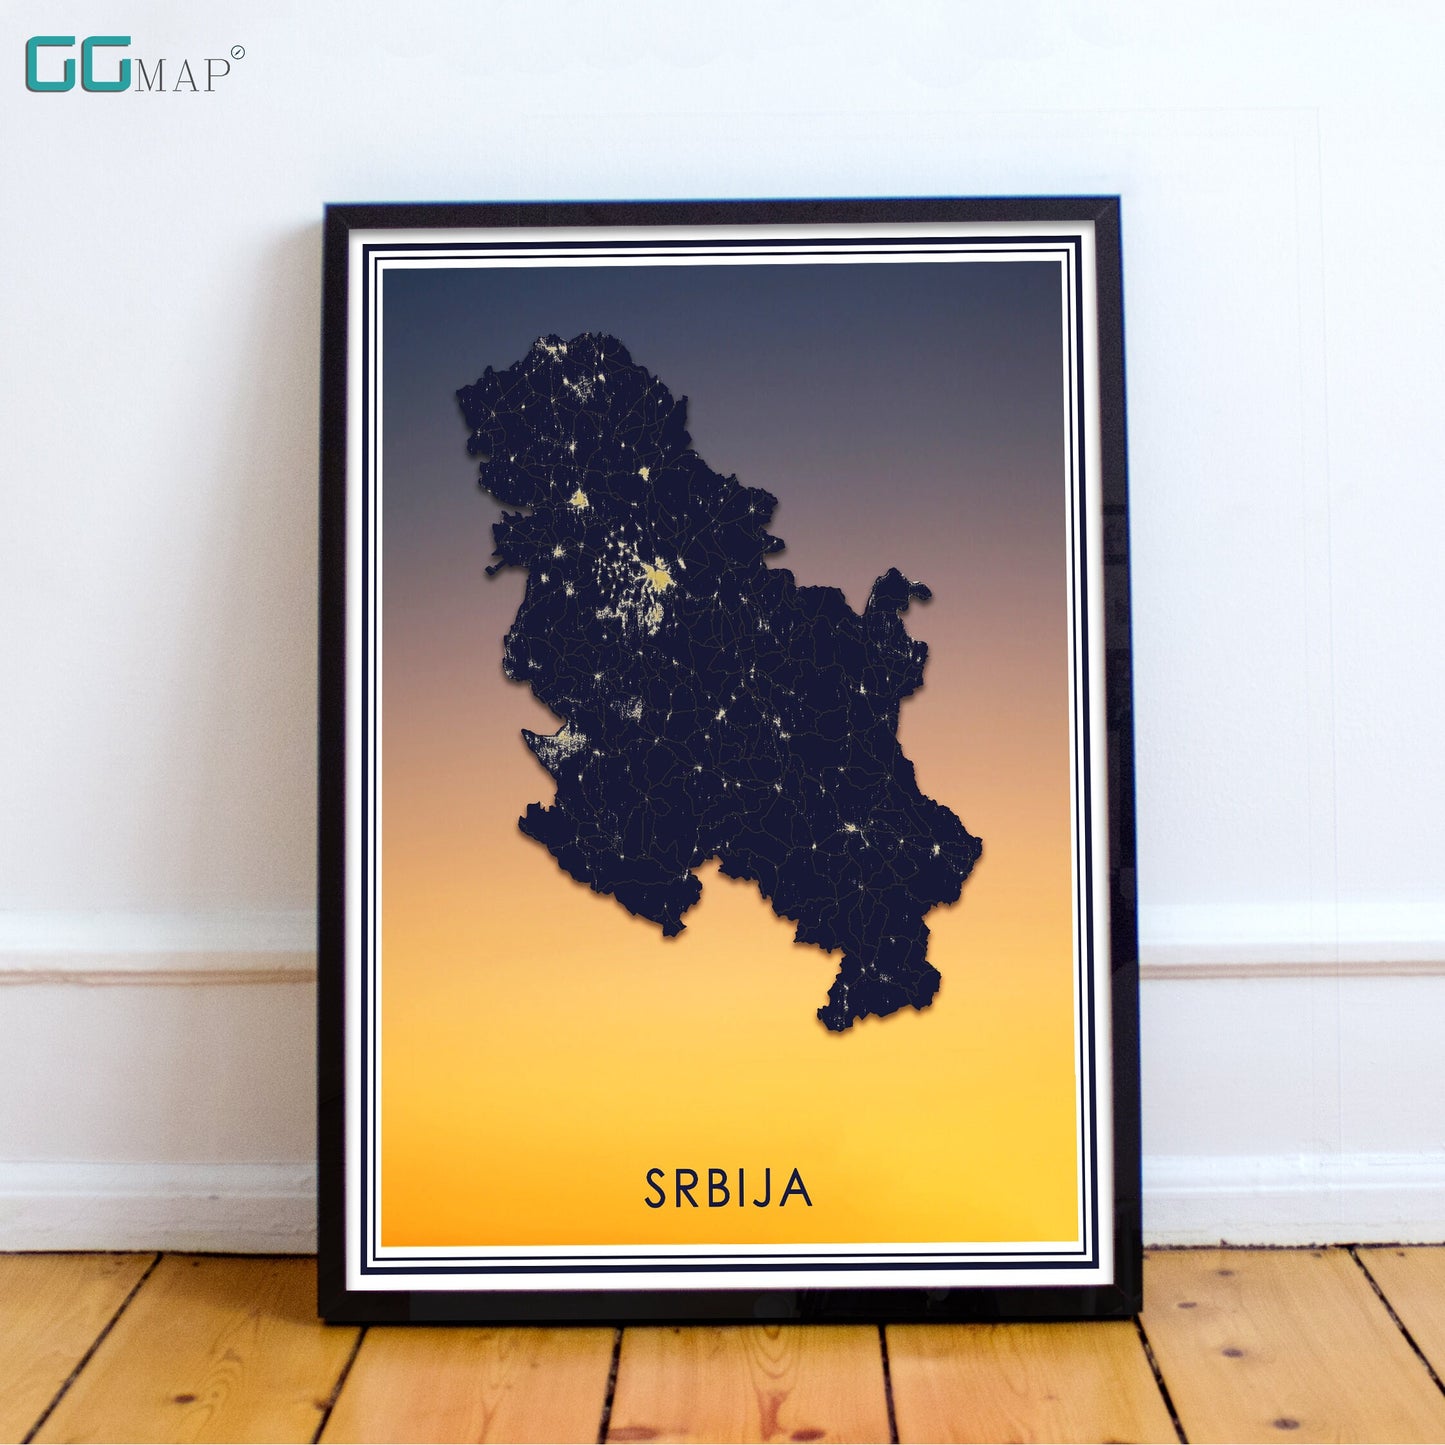 SRBIJA map - Serbia sunset map - Travel poster - Home Decor - Wall decor - Office map - Serbia gift - GeoGIS studio